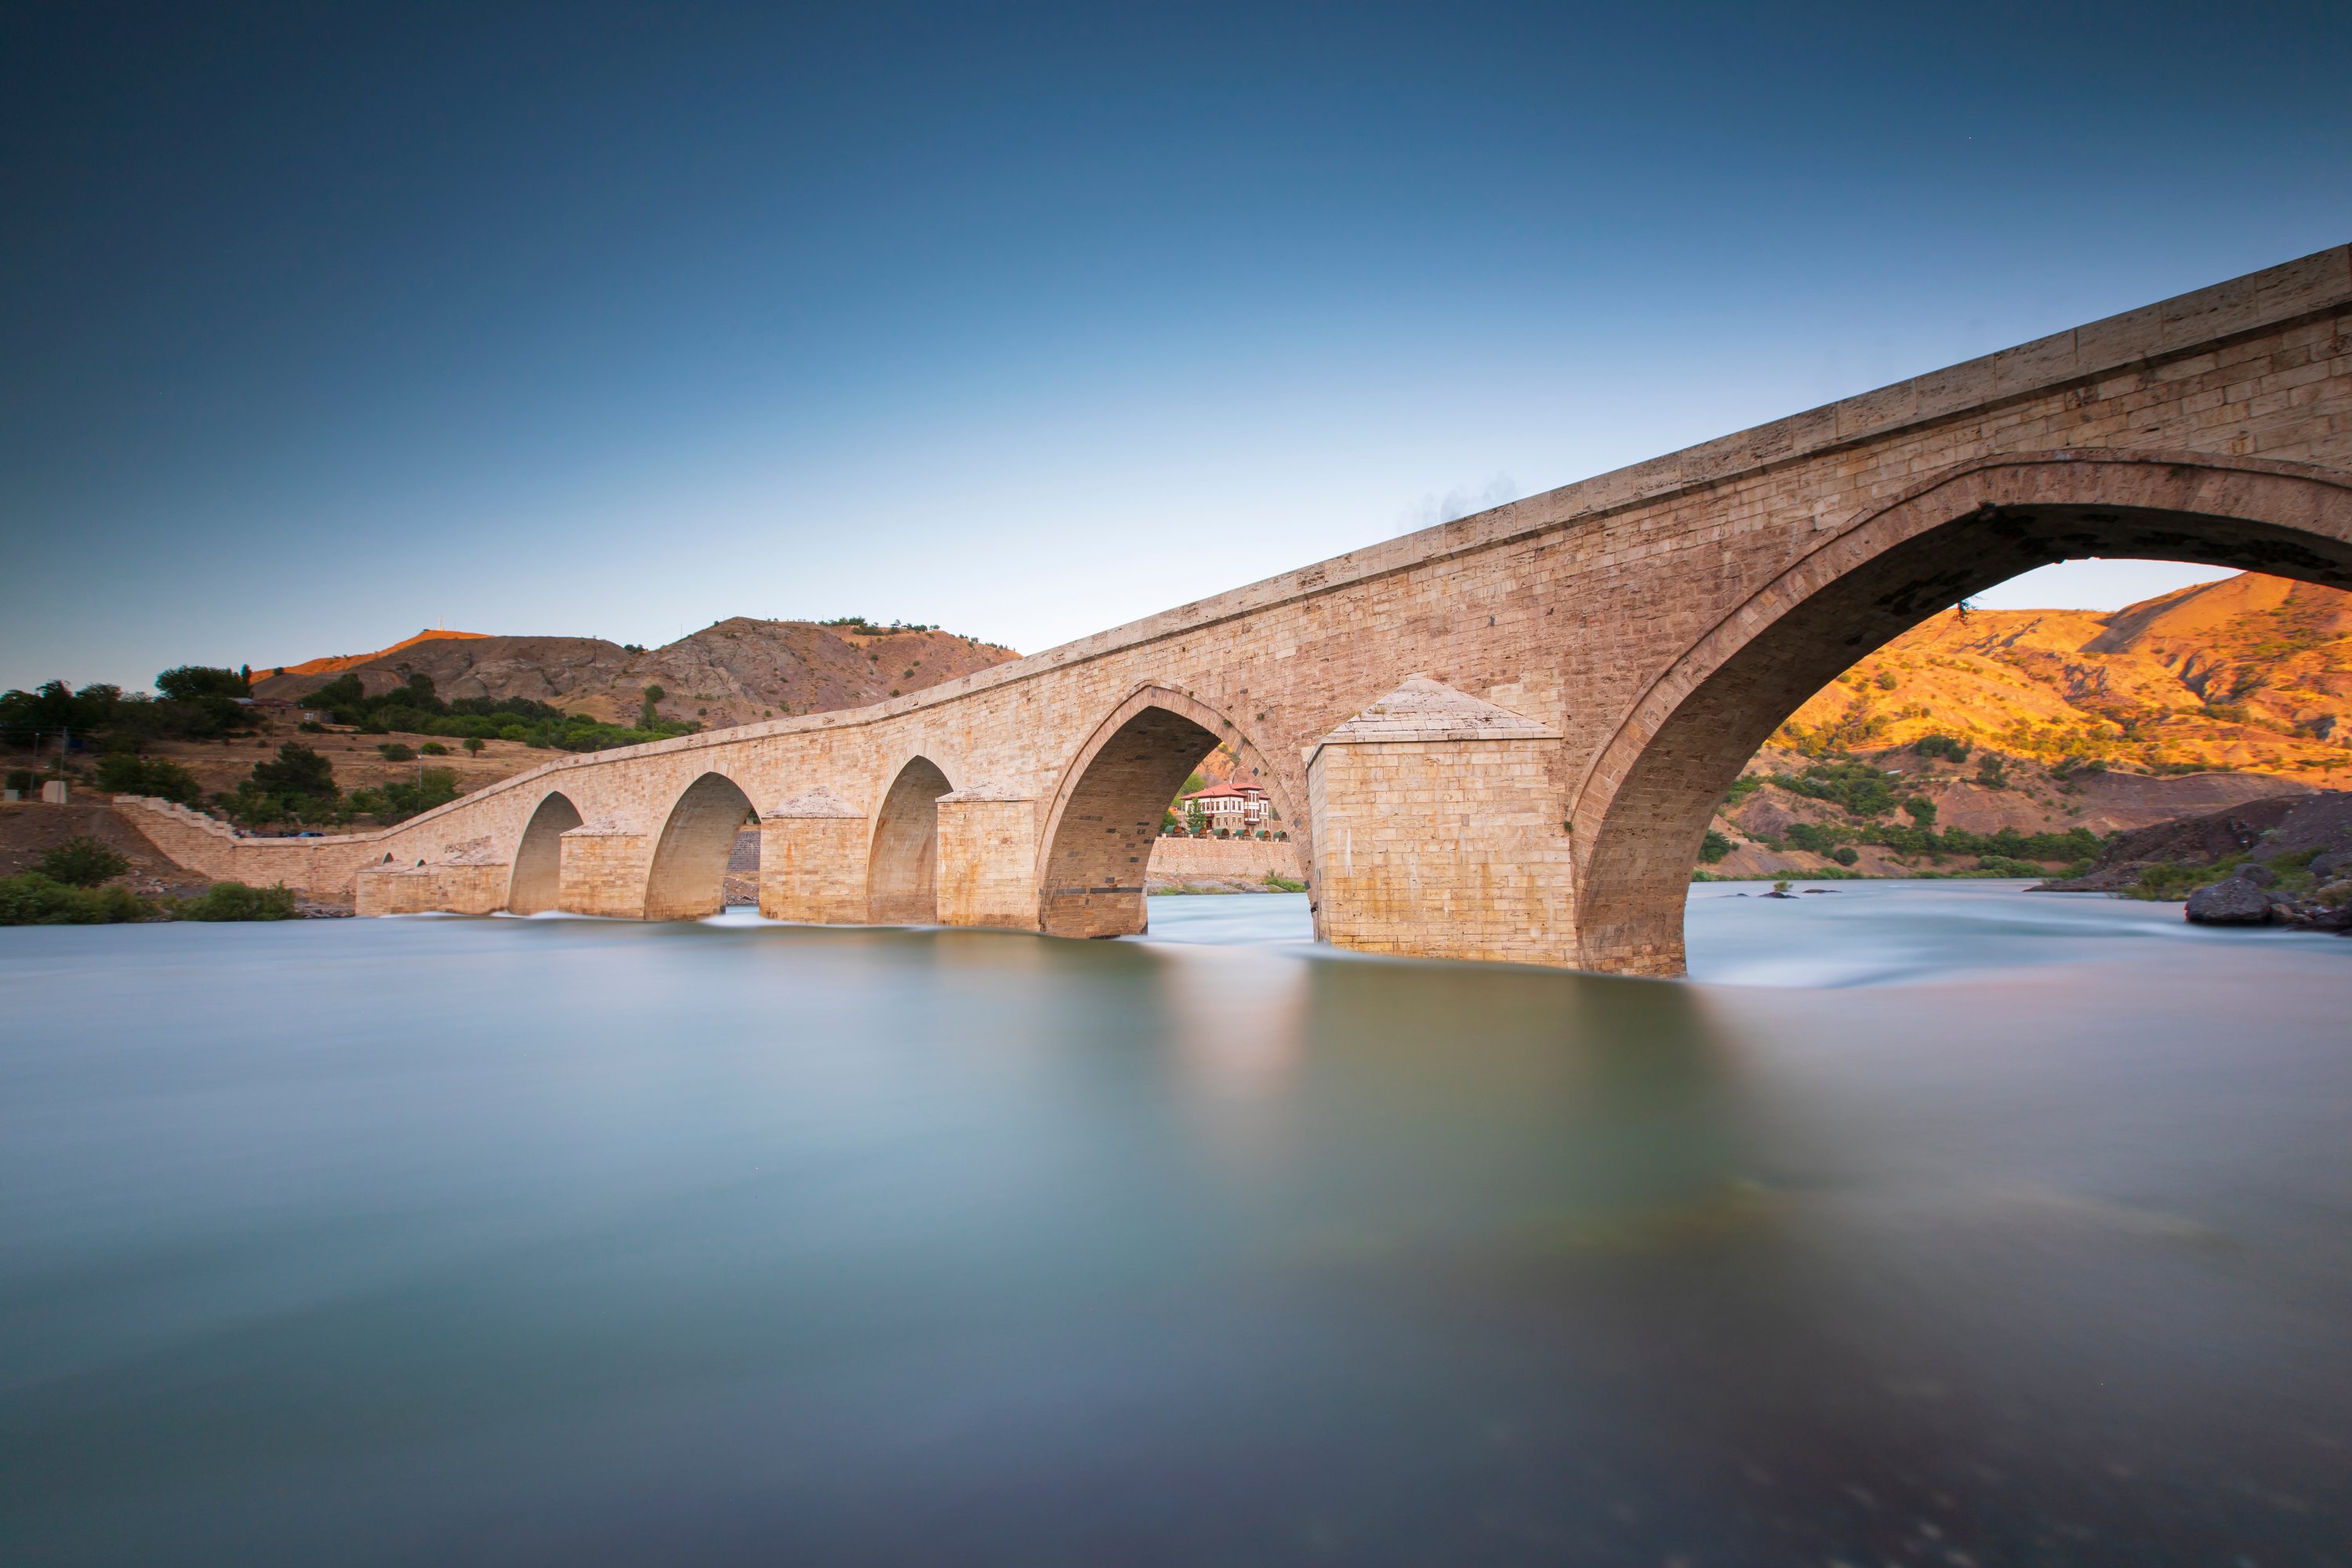 Paparan panjang penuh warna dengan filter kepadatan netral dari Jembatan Palu bersejarah, Elazığ, Türkiye.  (Foto Shutterstock)